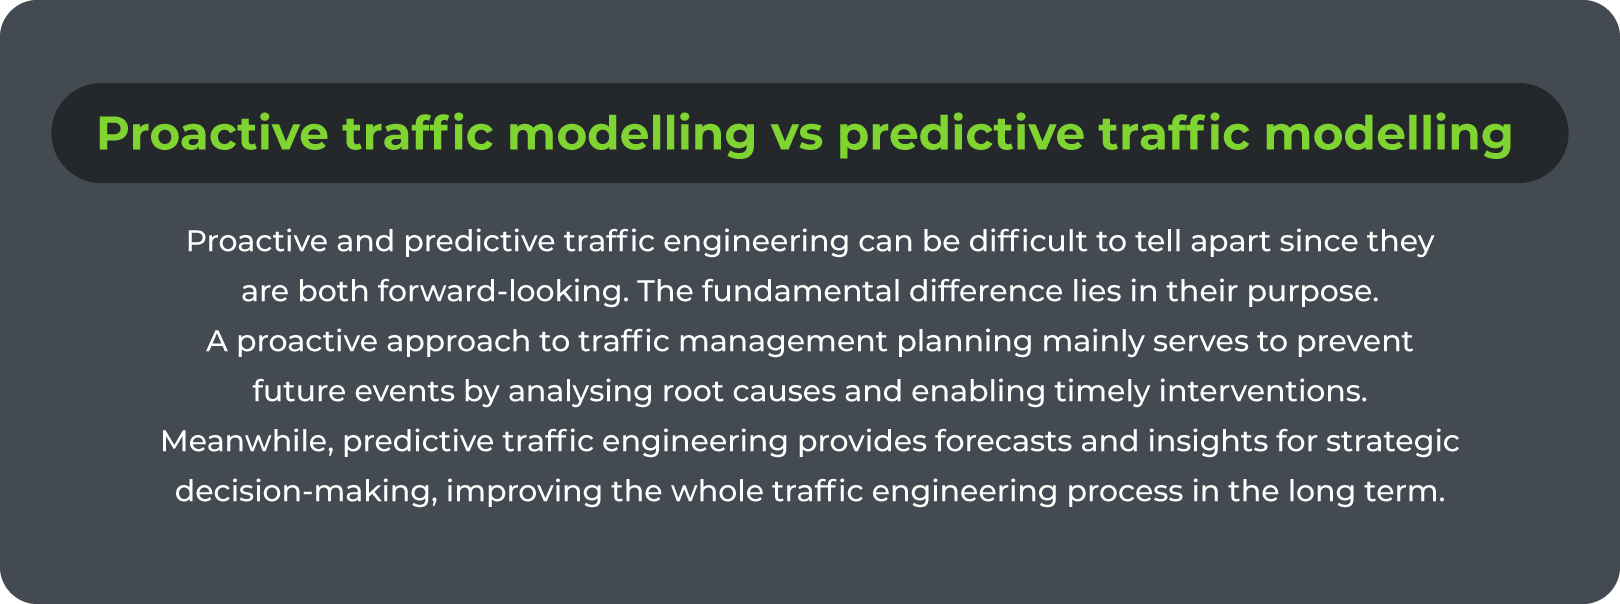 proactive_Traffic_modelling